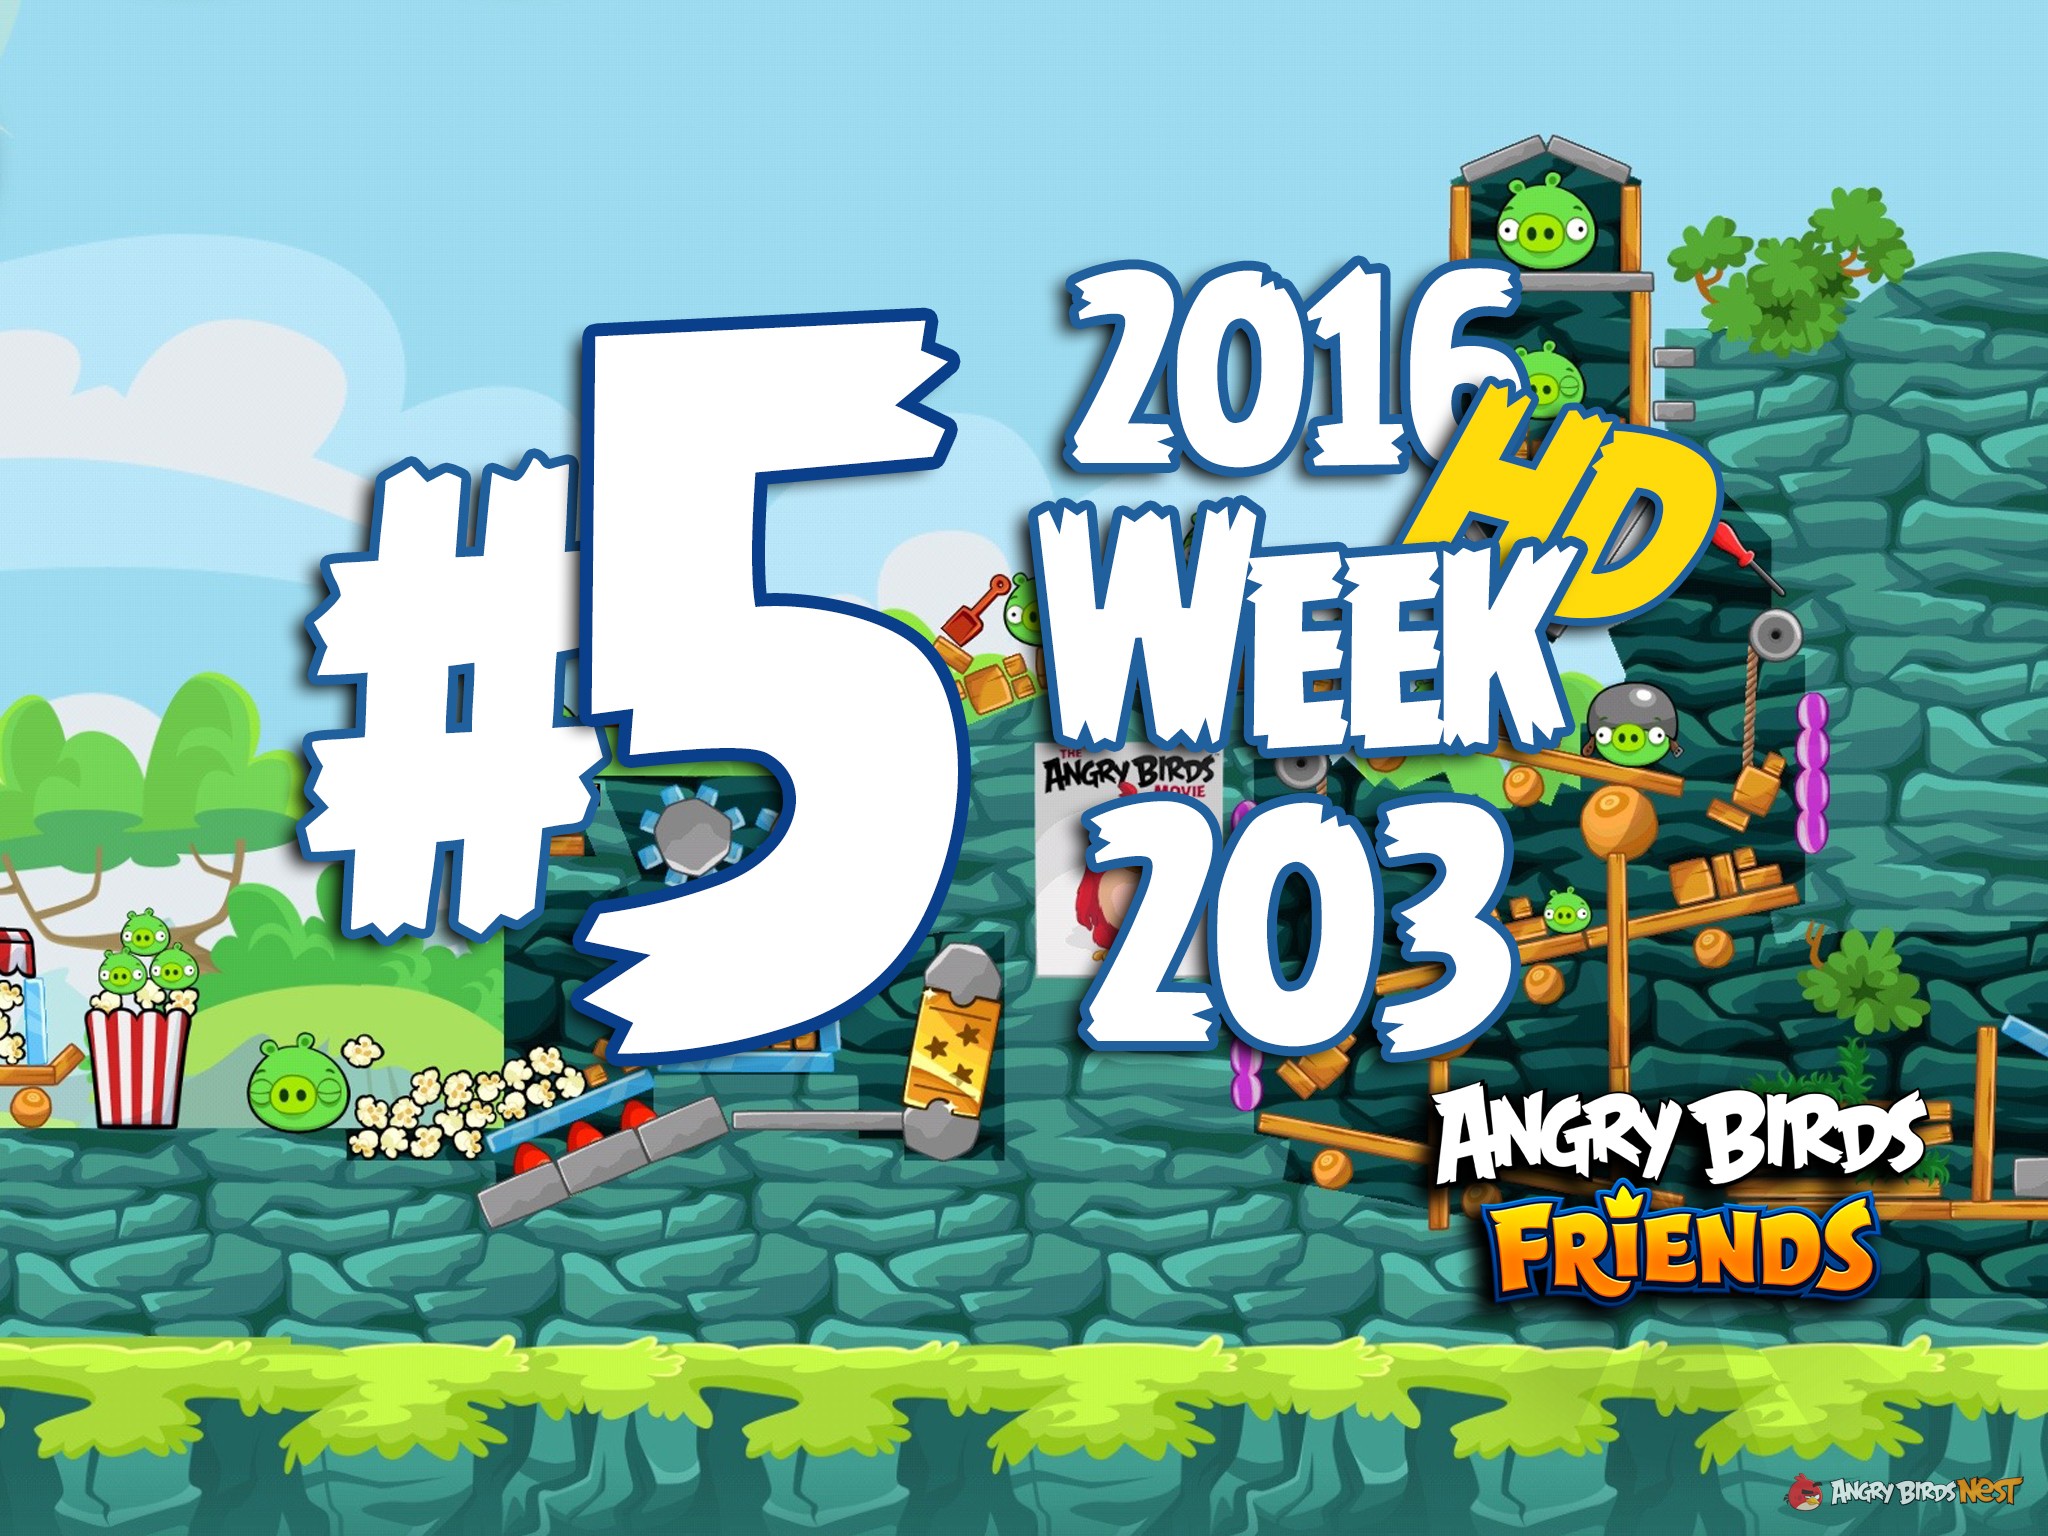 Angry Birds Friends Tournament Level 5 Week 203 Walkthrough | March 31st 2016